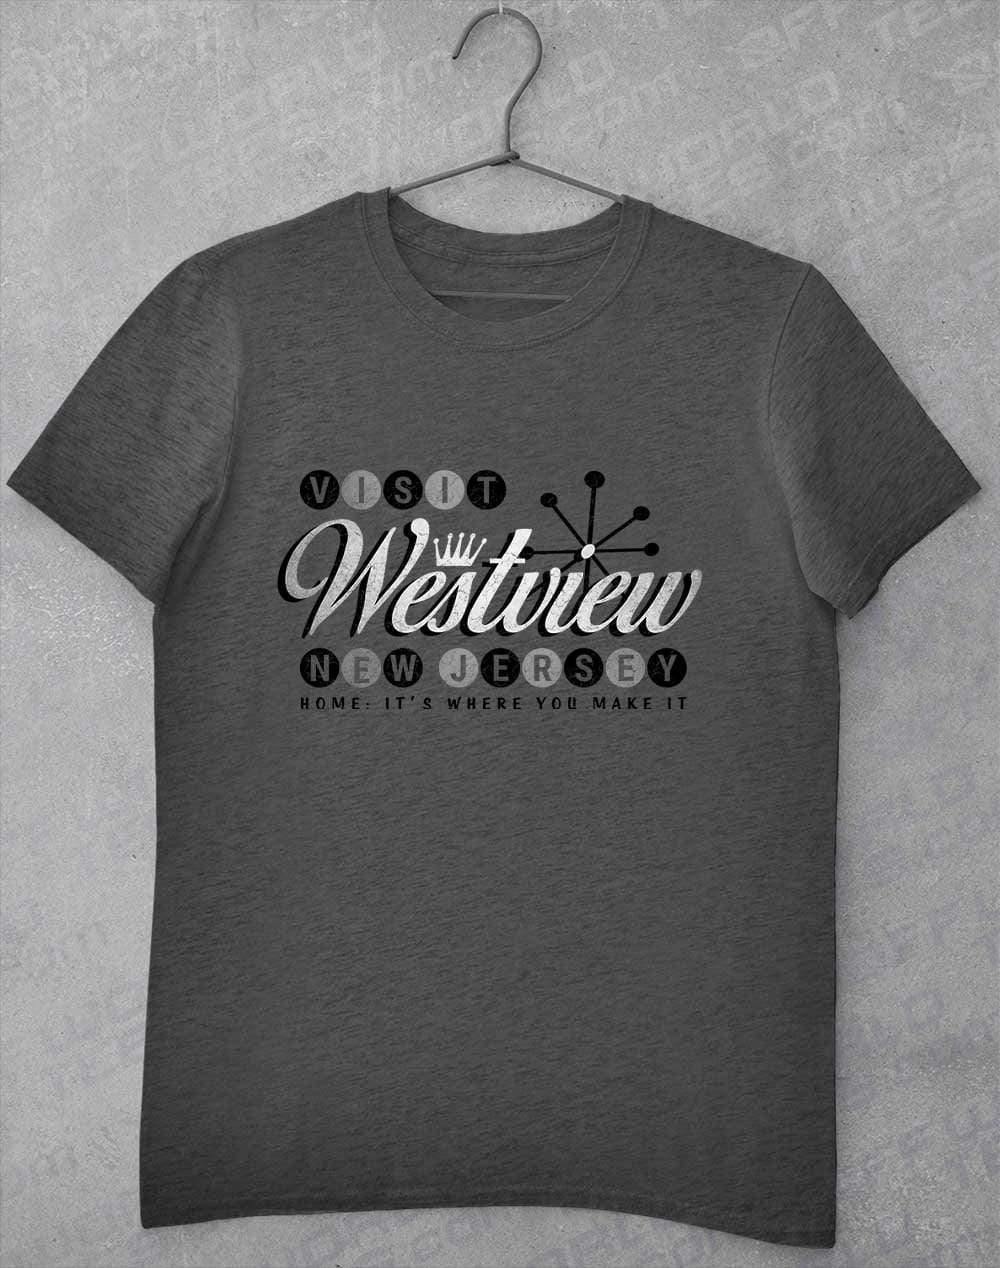 Visit Westview New Jersey T-Shirt S / Dark Heather  - Off World Tees